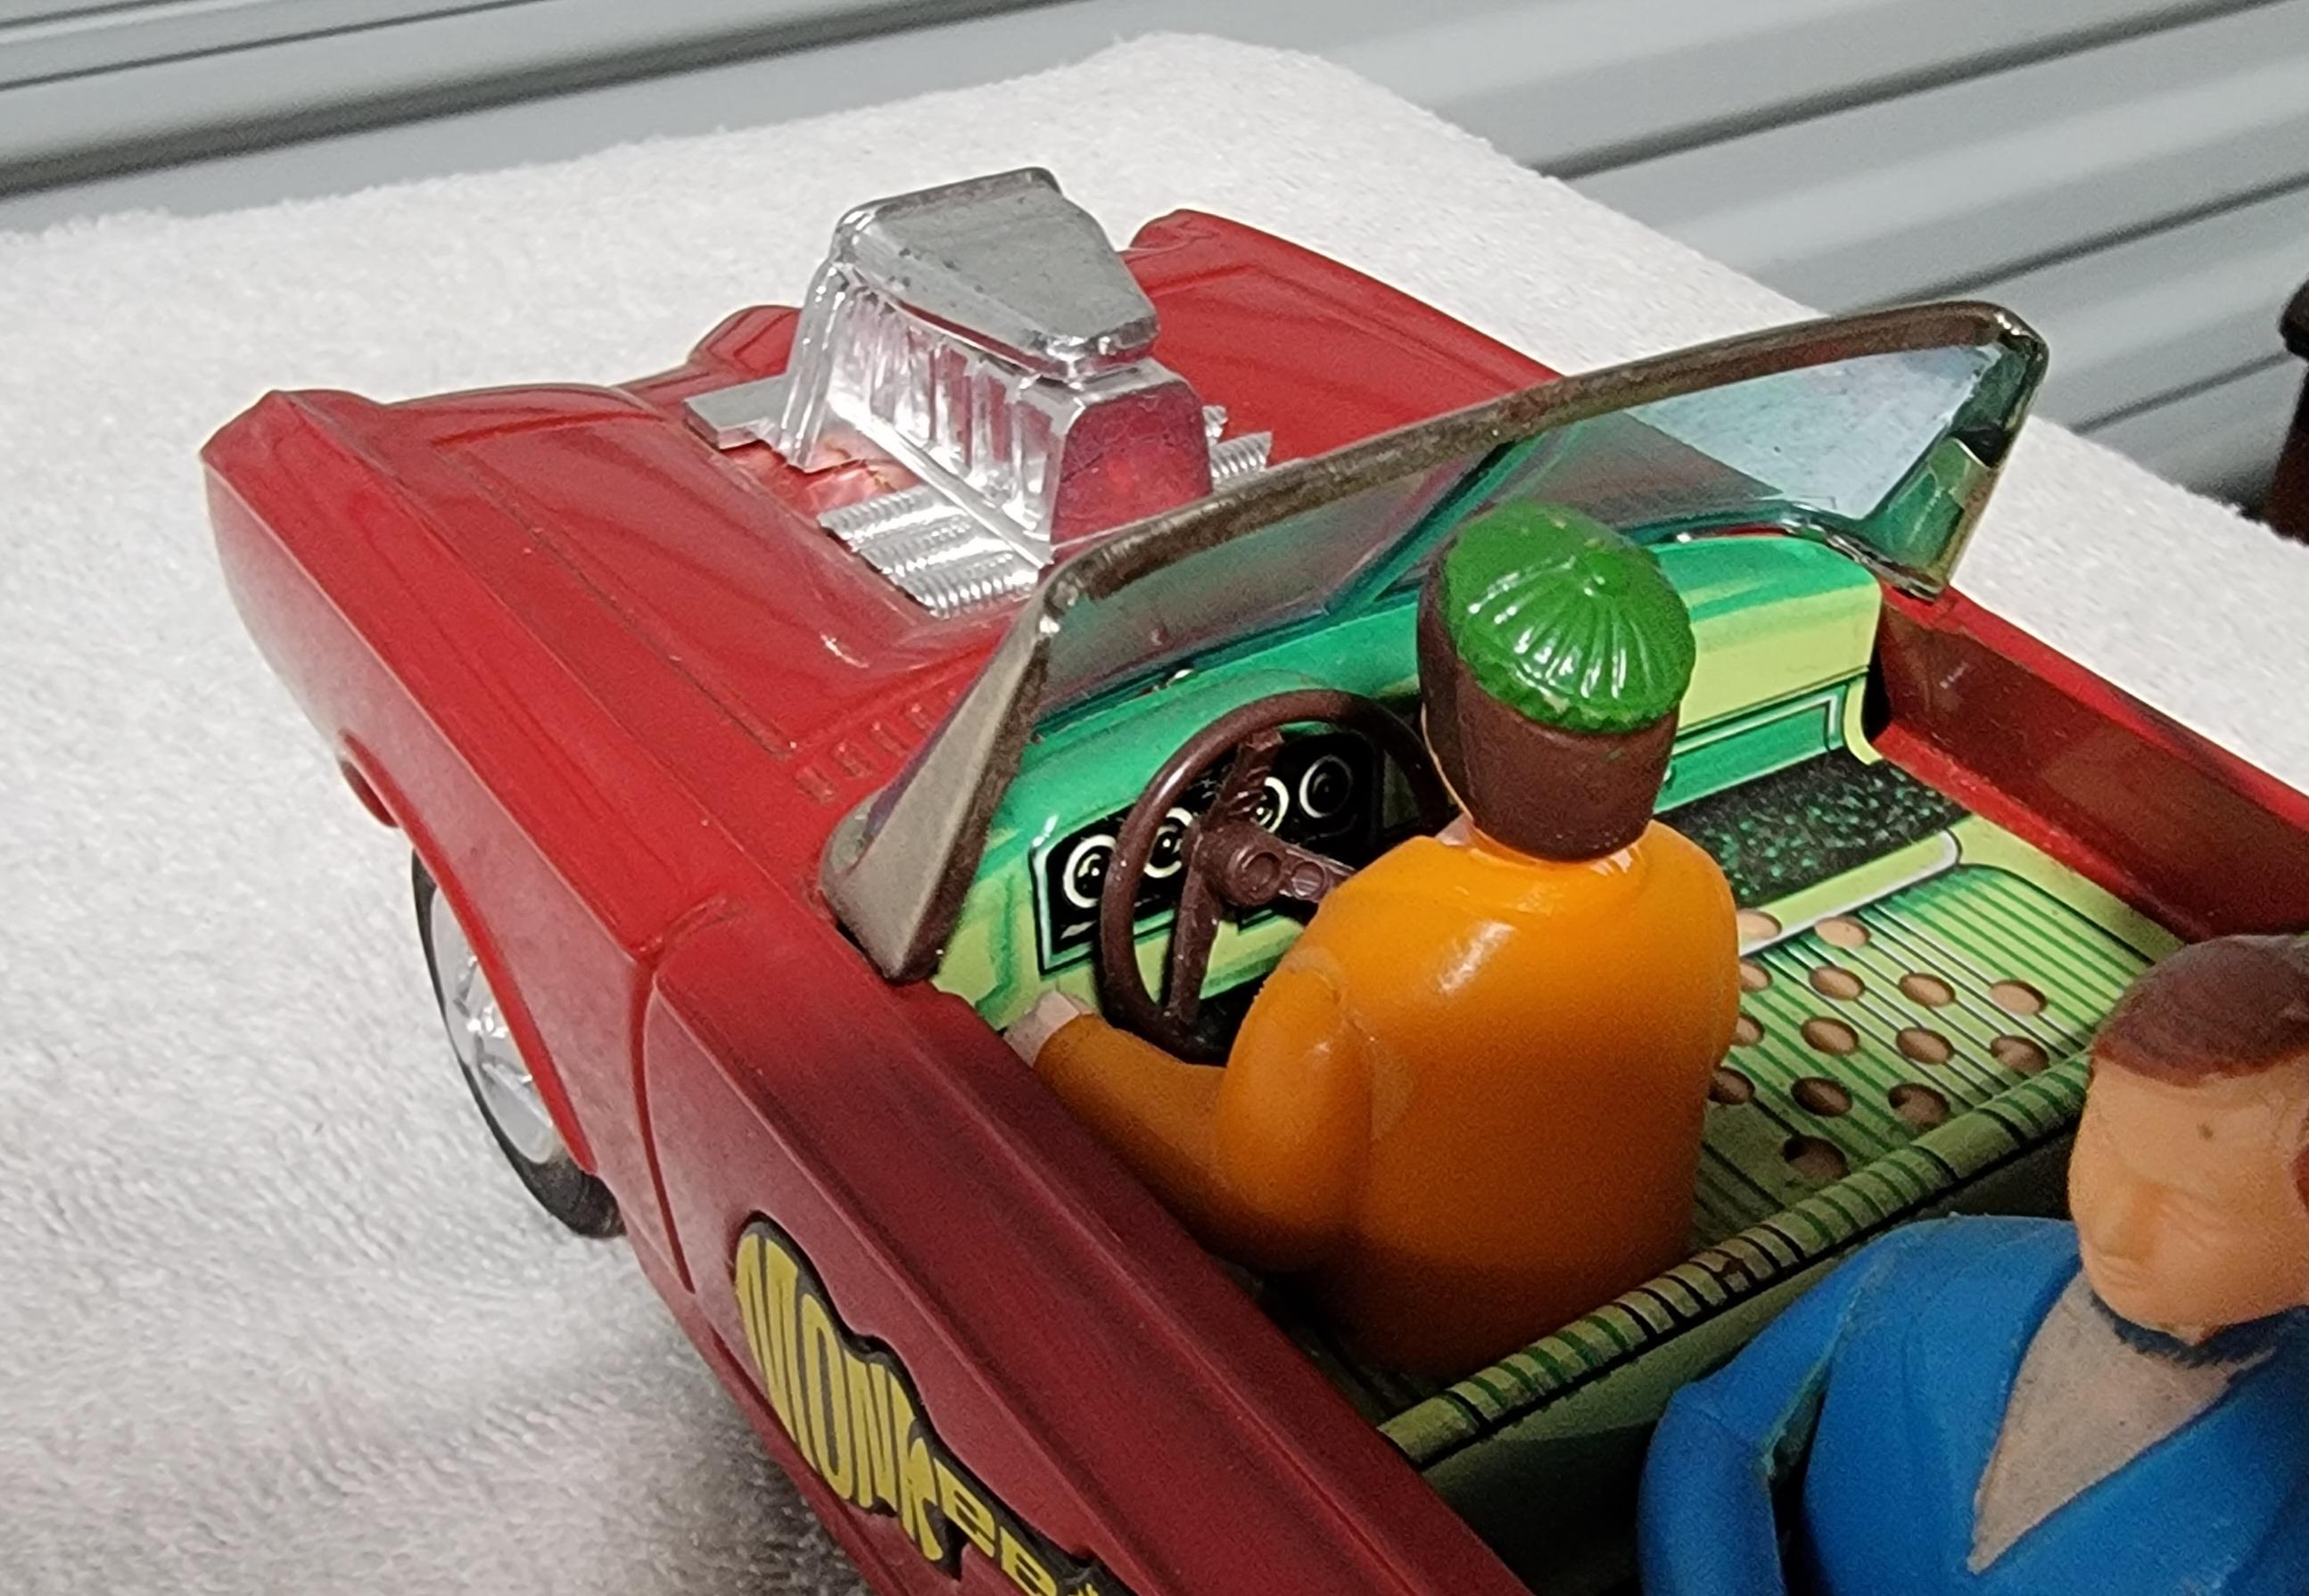 Metal Monkeys Monkee-Mobile Toy Car